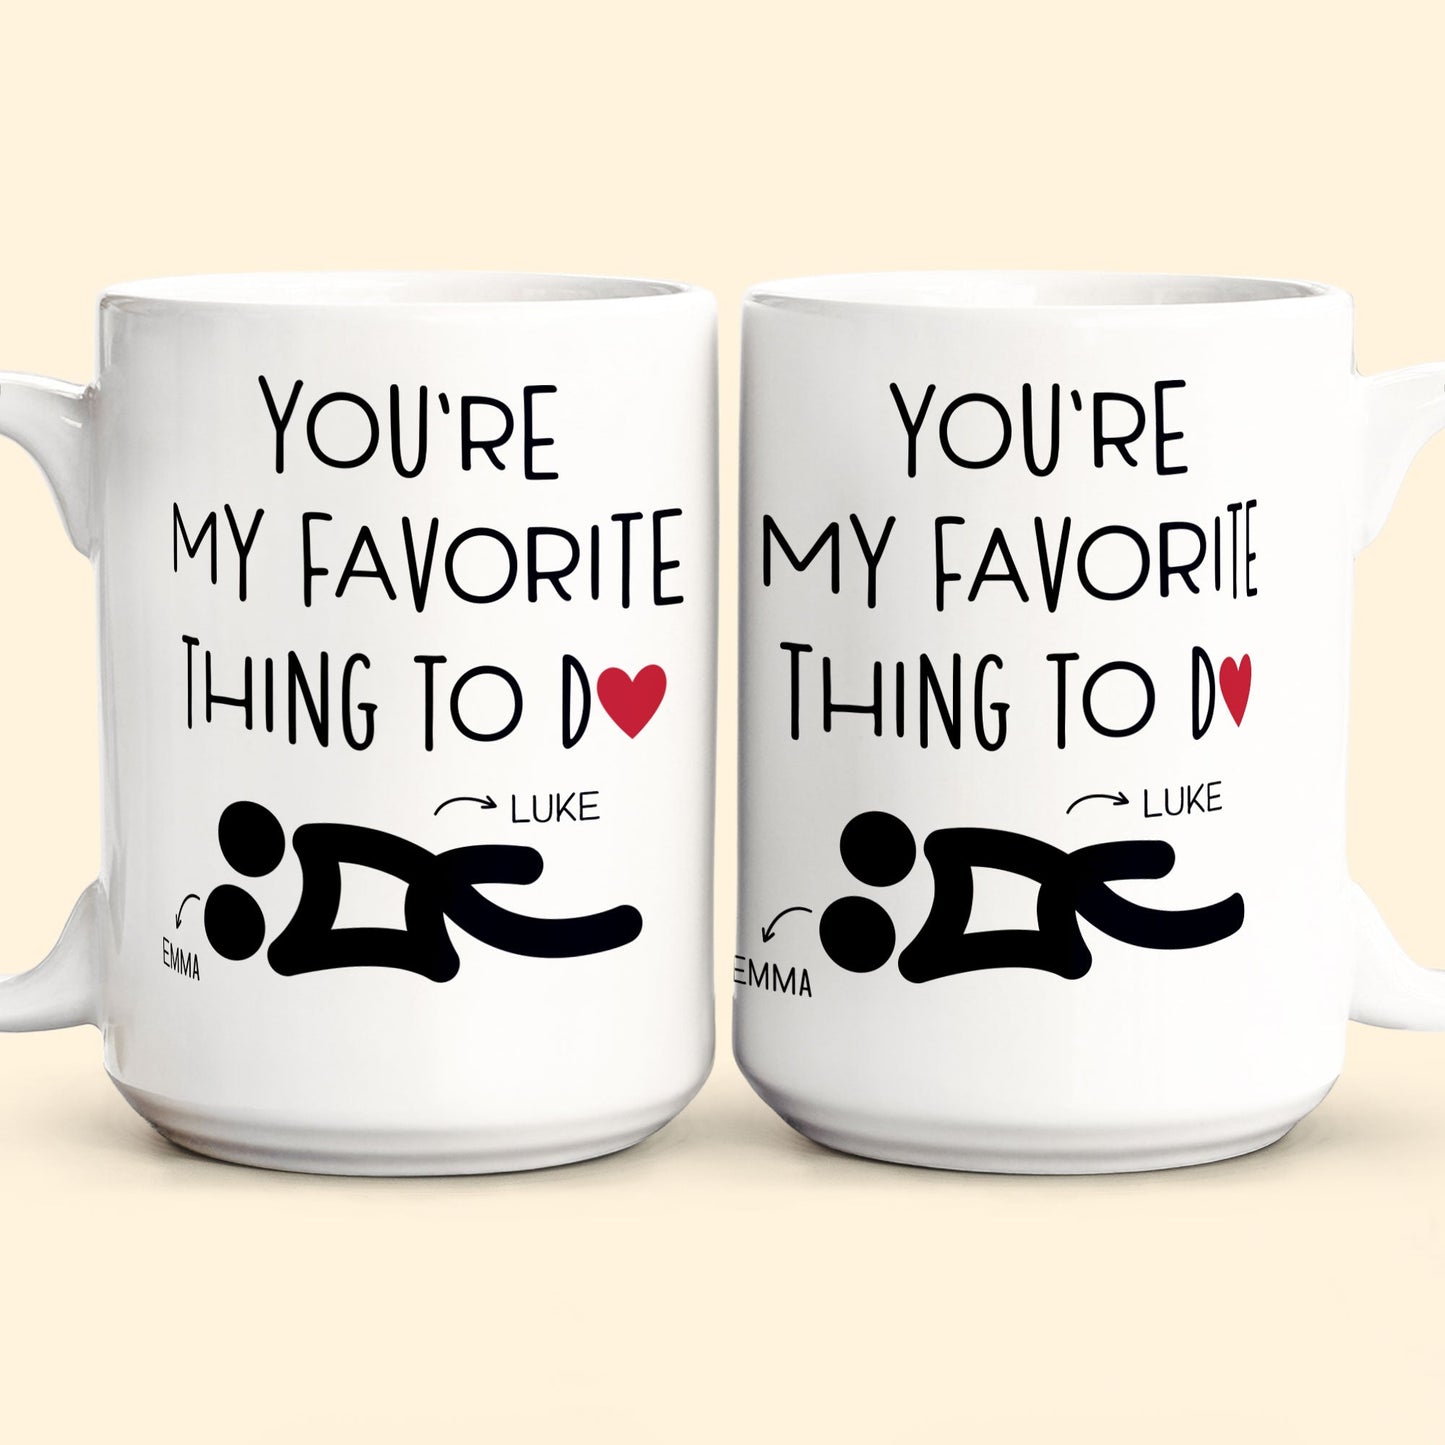 You're My Favorite - Personalized Couple Mug, Sunflowerly